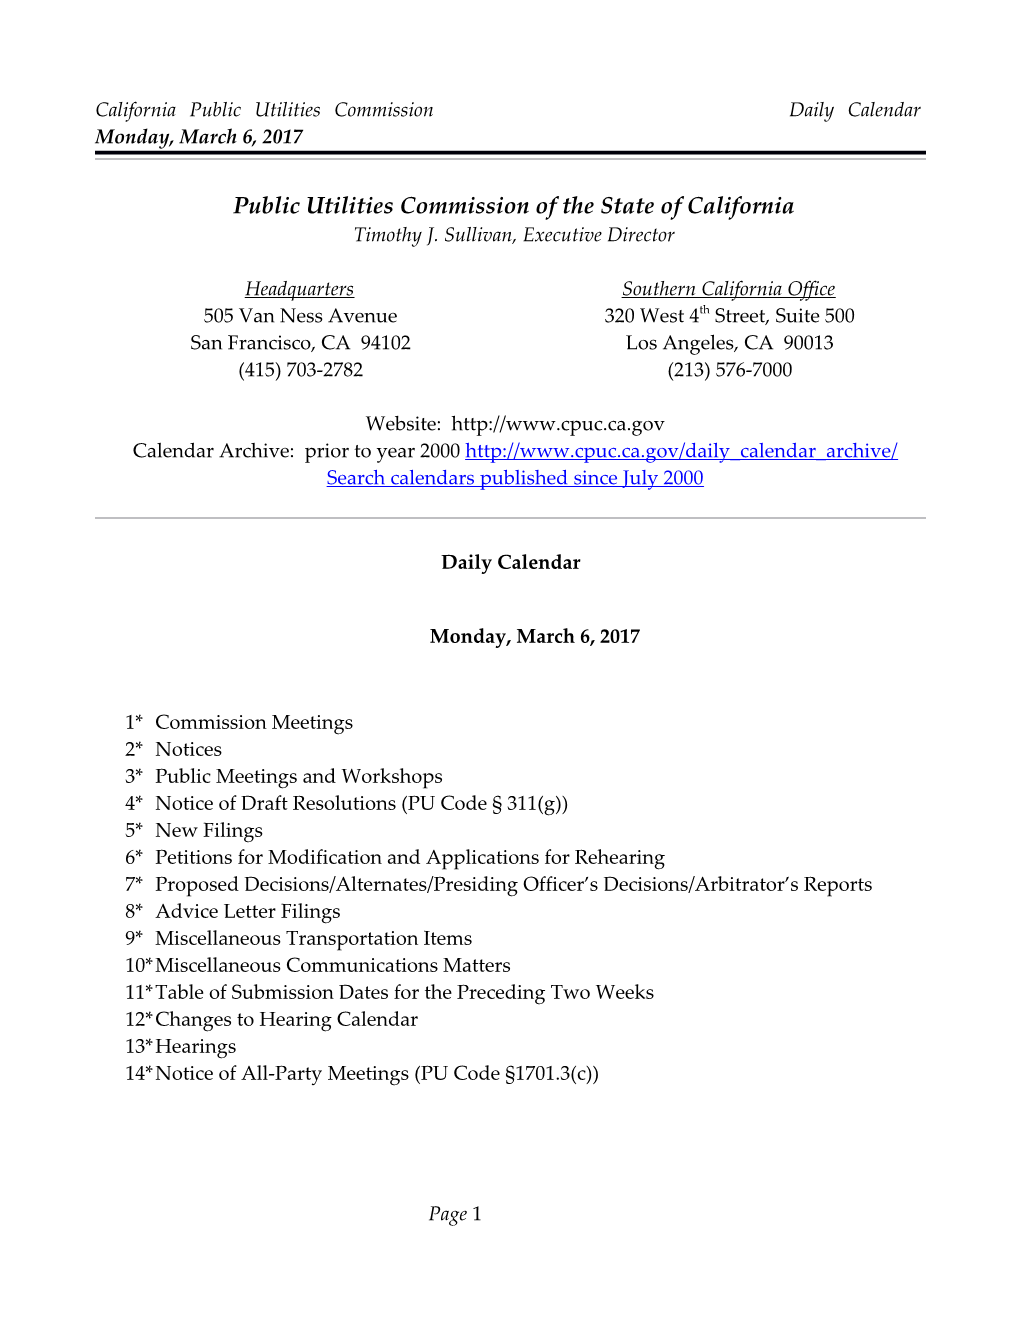 California Public Utilities Commission Daily Calendar Monday, March 6, 2017